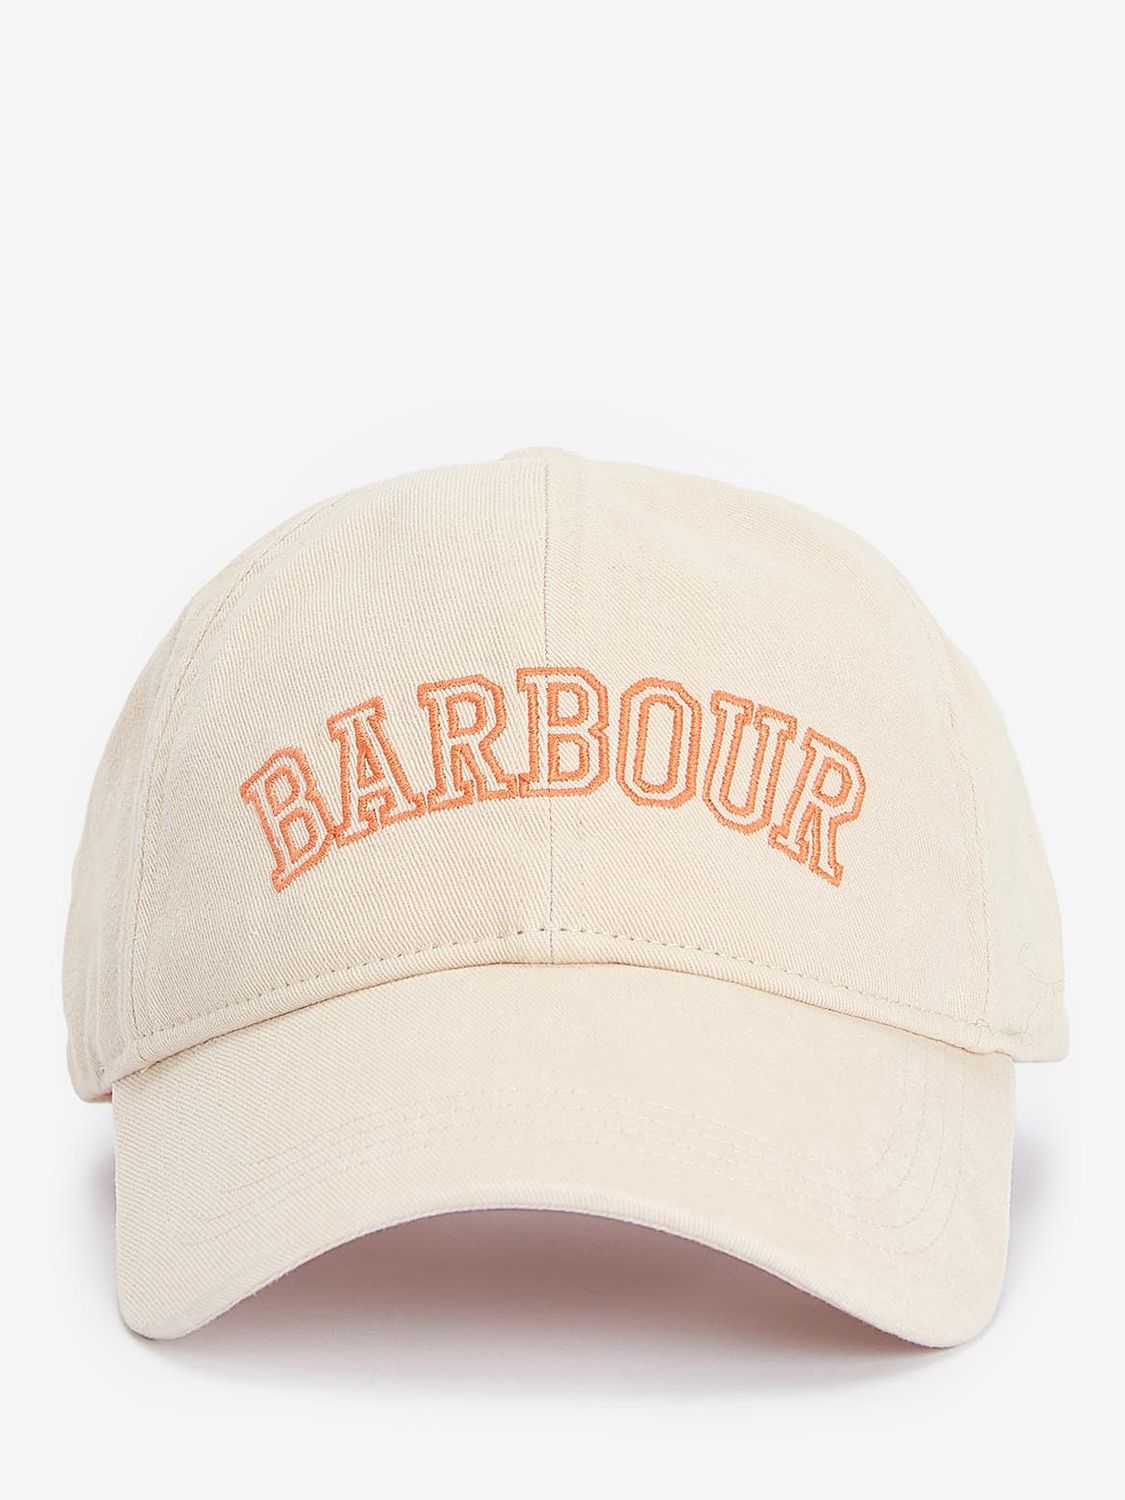 Barbour Emily Sports Cap, White/Orange